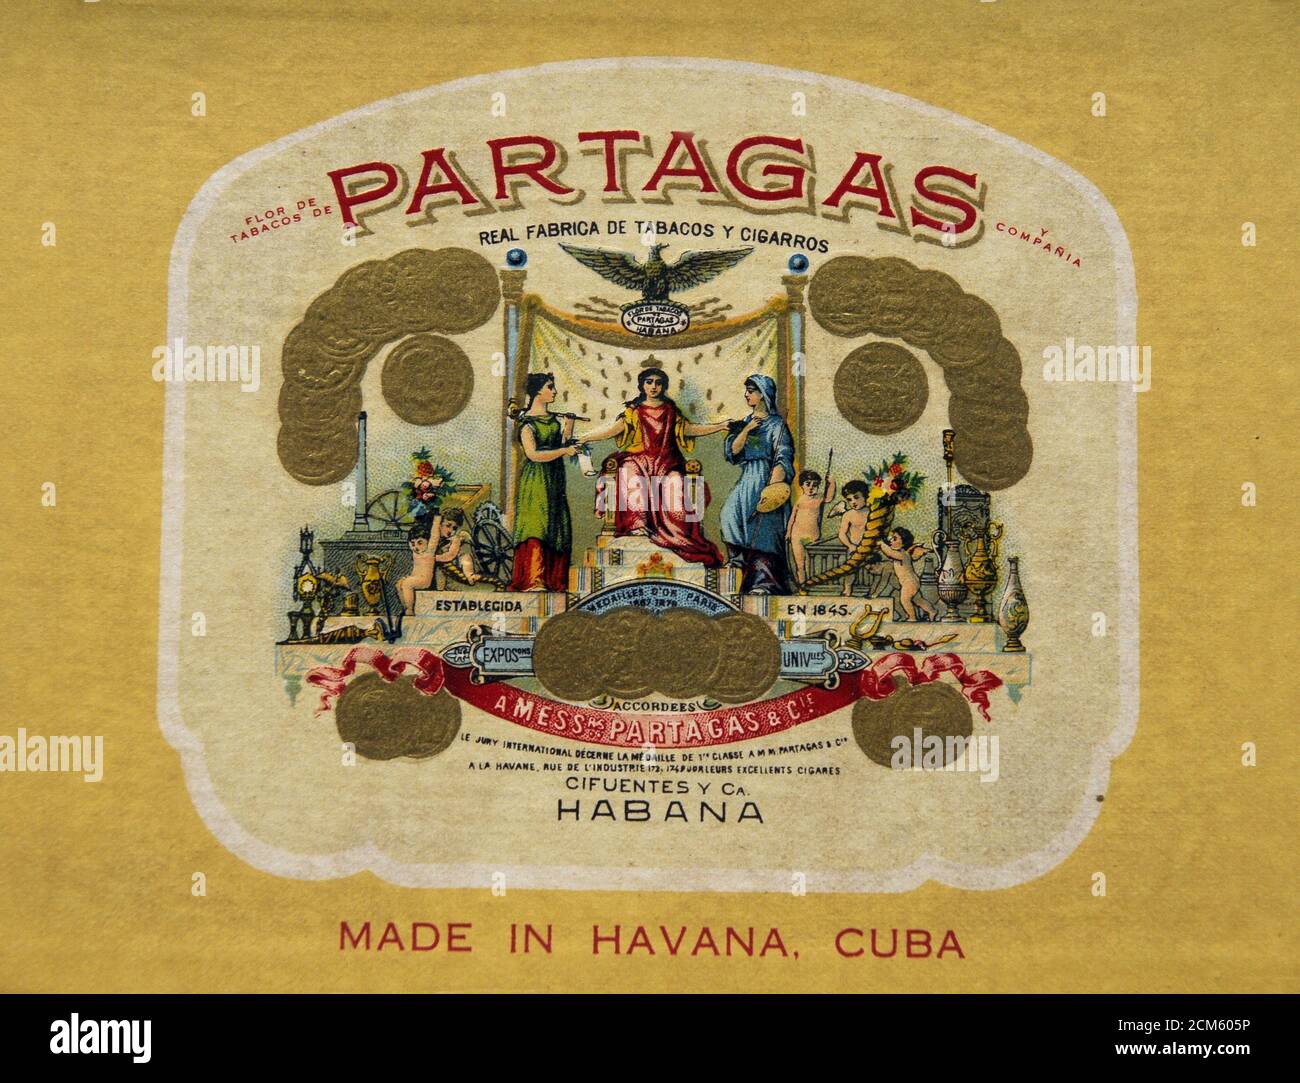 COMPAÑIA FLOR DE TABACOS DE PARTAGAS, HABANA, CUBA. Foto Stock